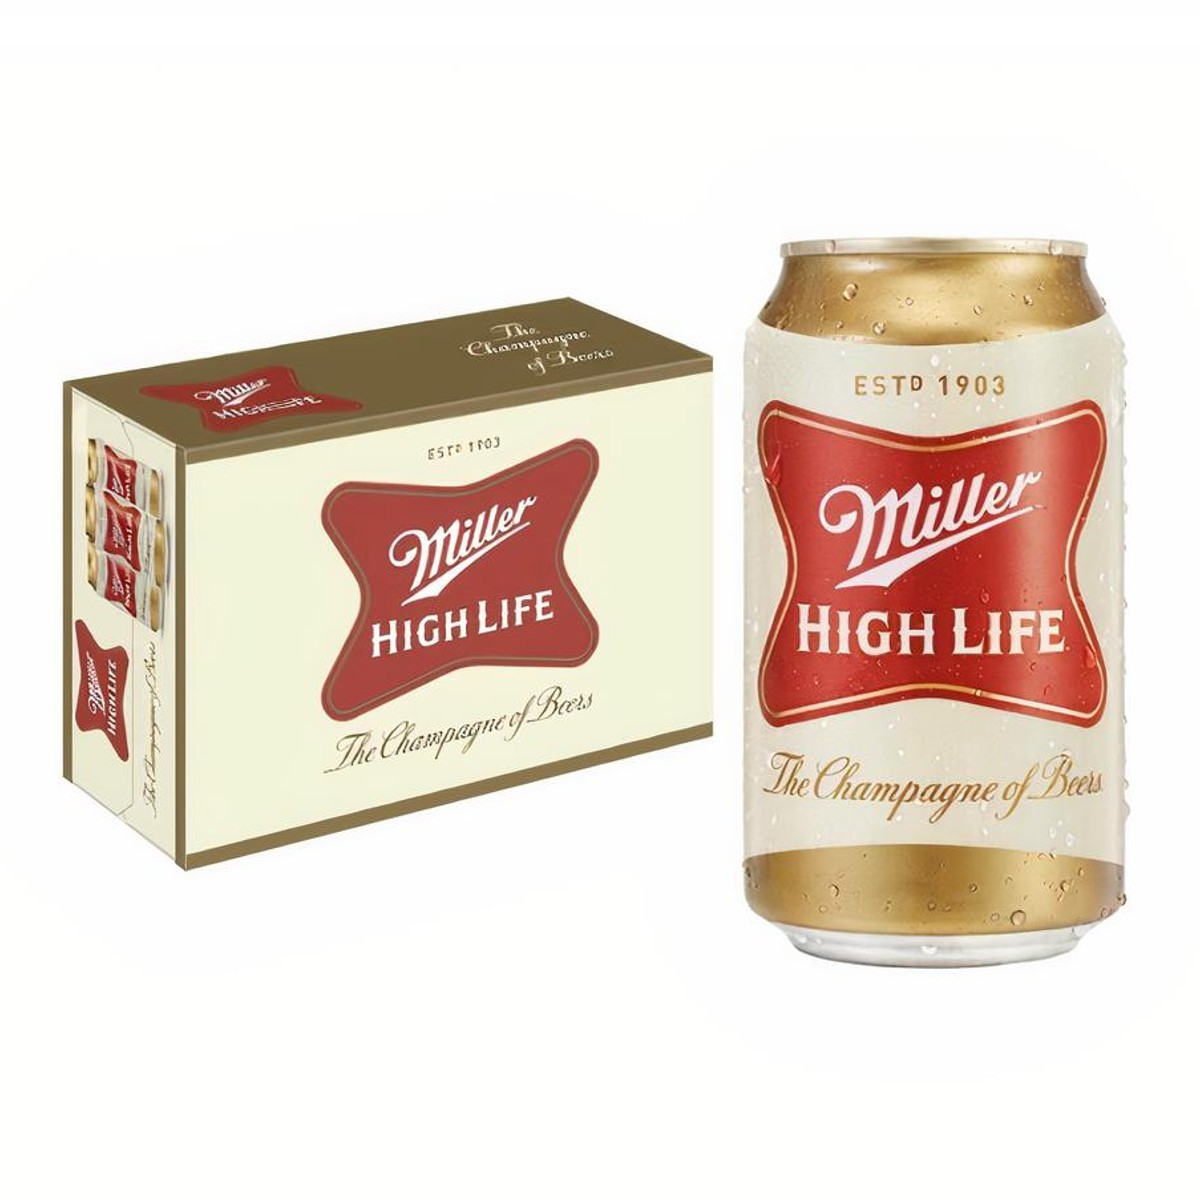 Miller High Life American Style Lager Beer 4.6% ABV Bottles - 12-12 Fl. Oz.